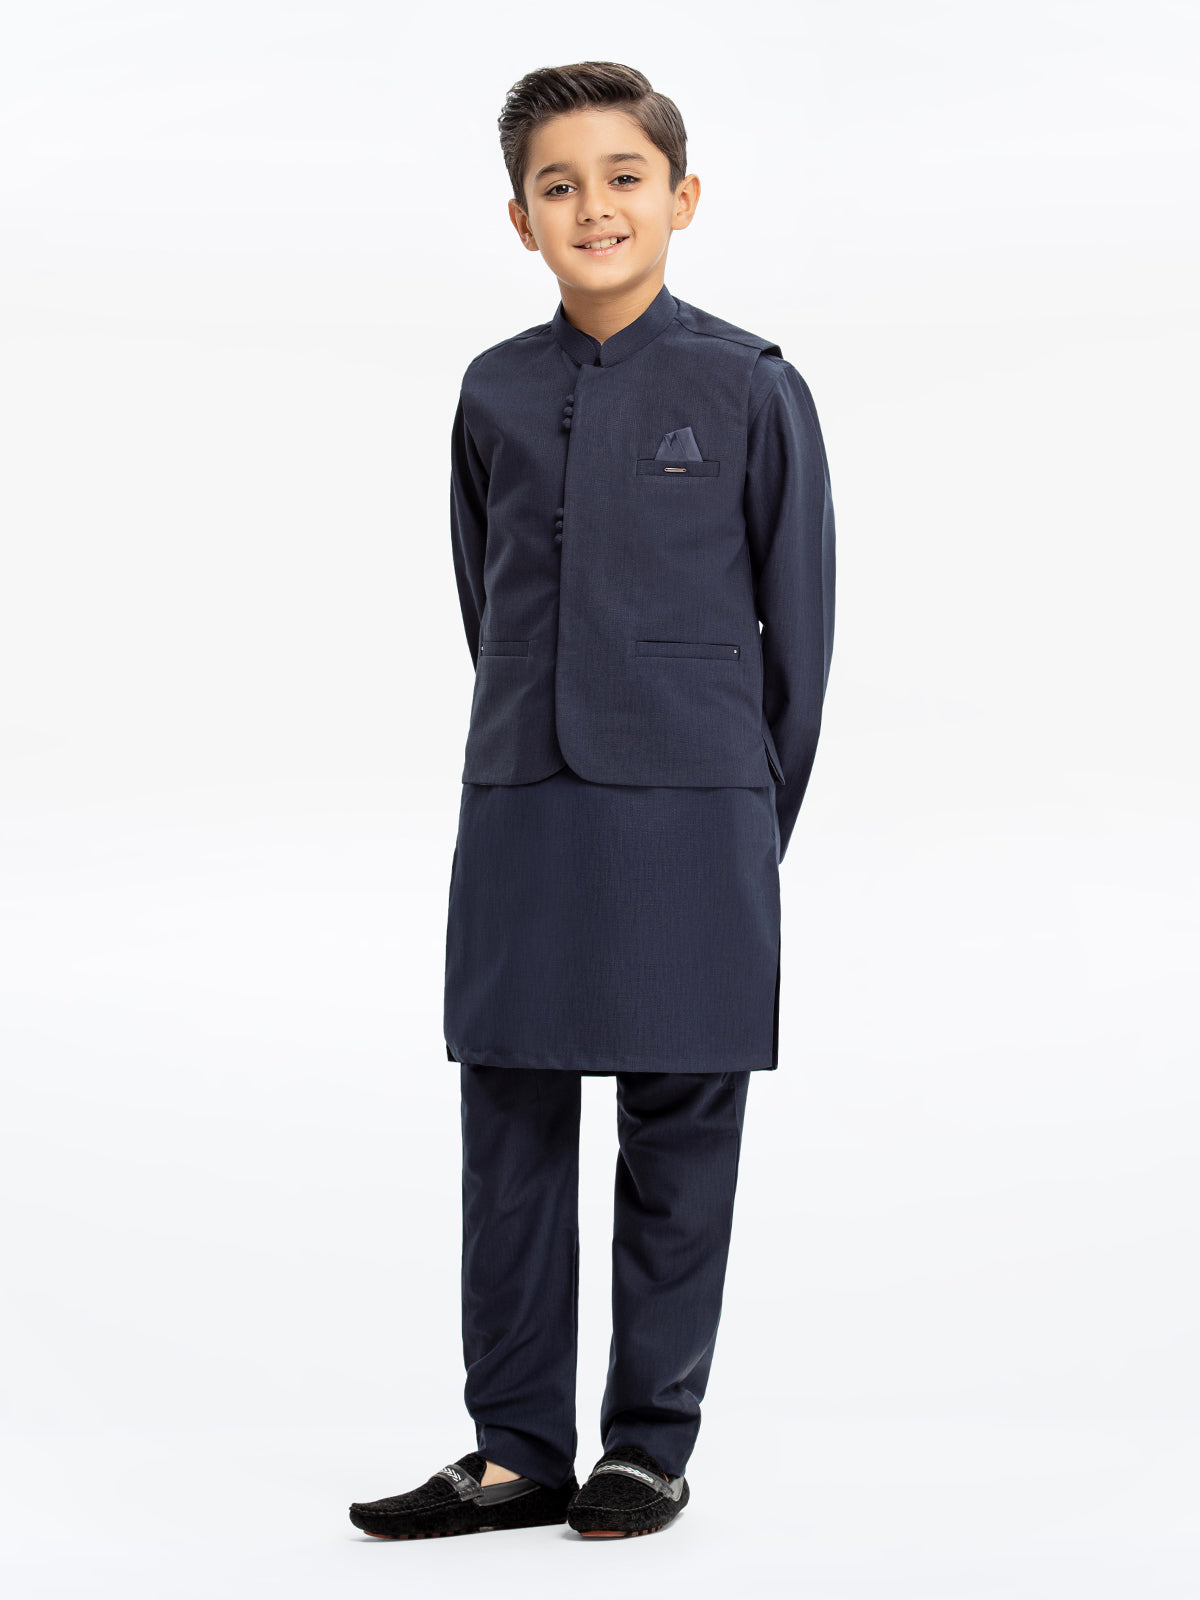 Boy's Navy Blue Waist Coat Suit - EBTWCS23-25185